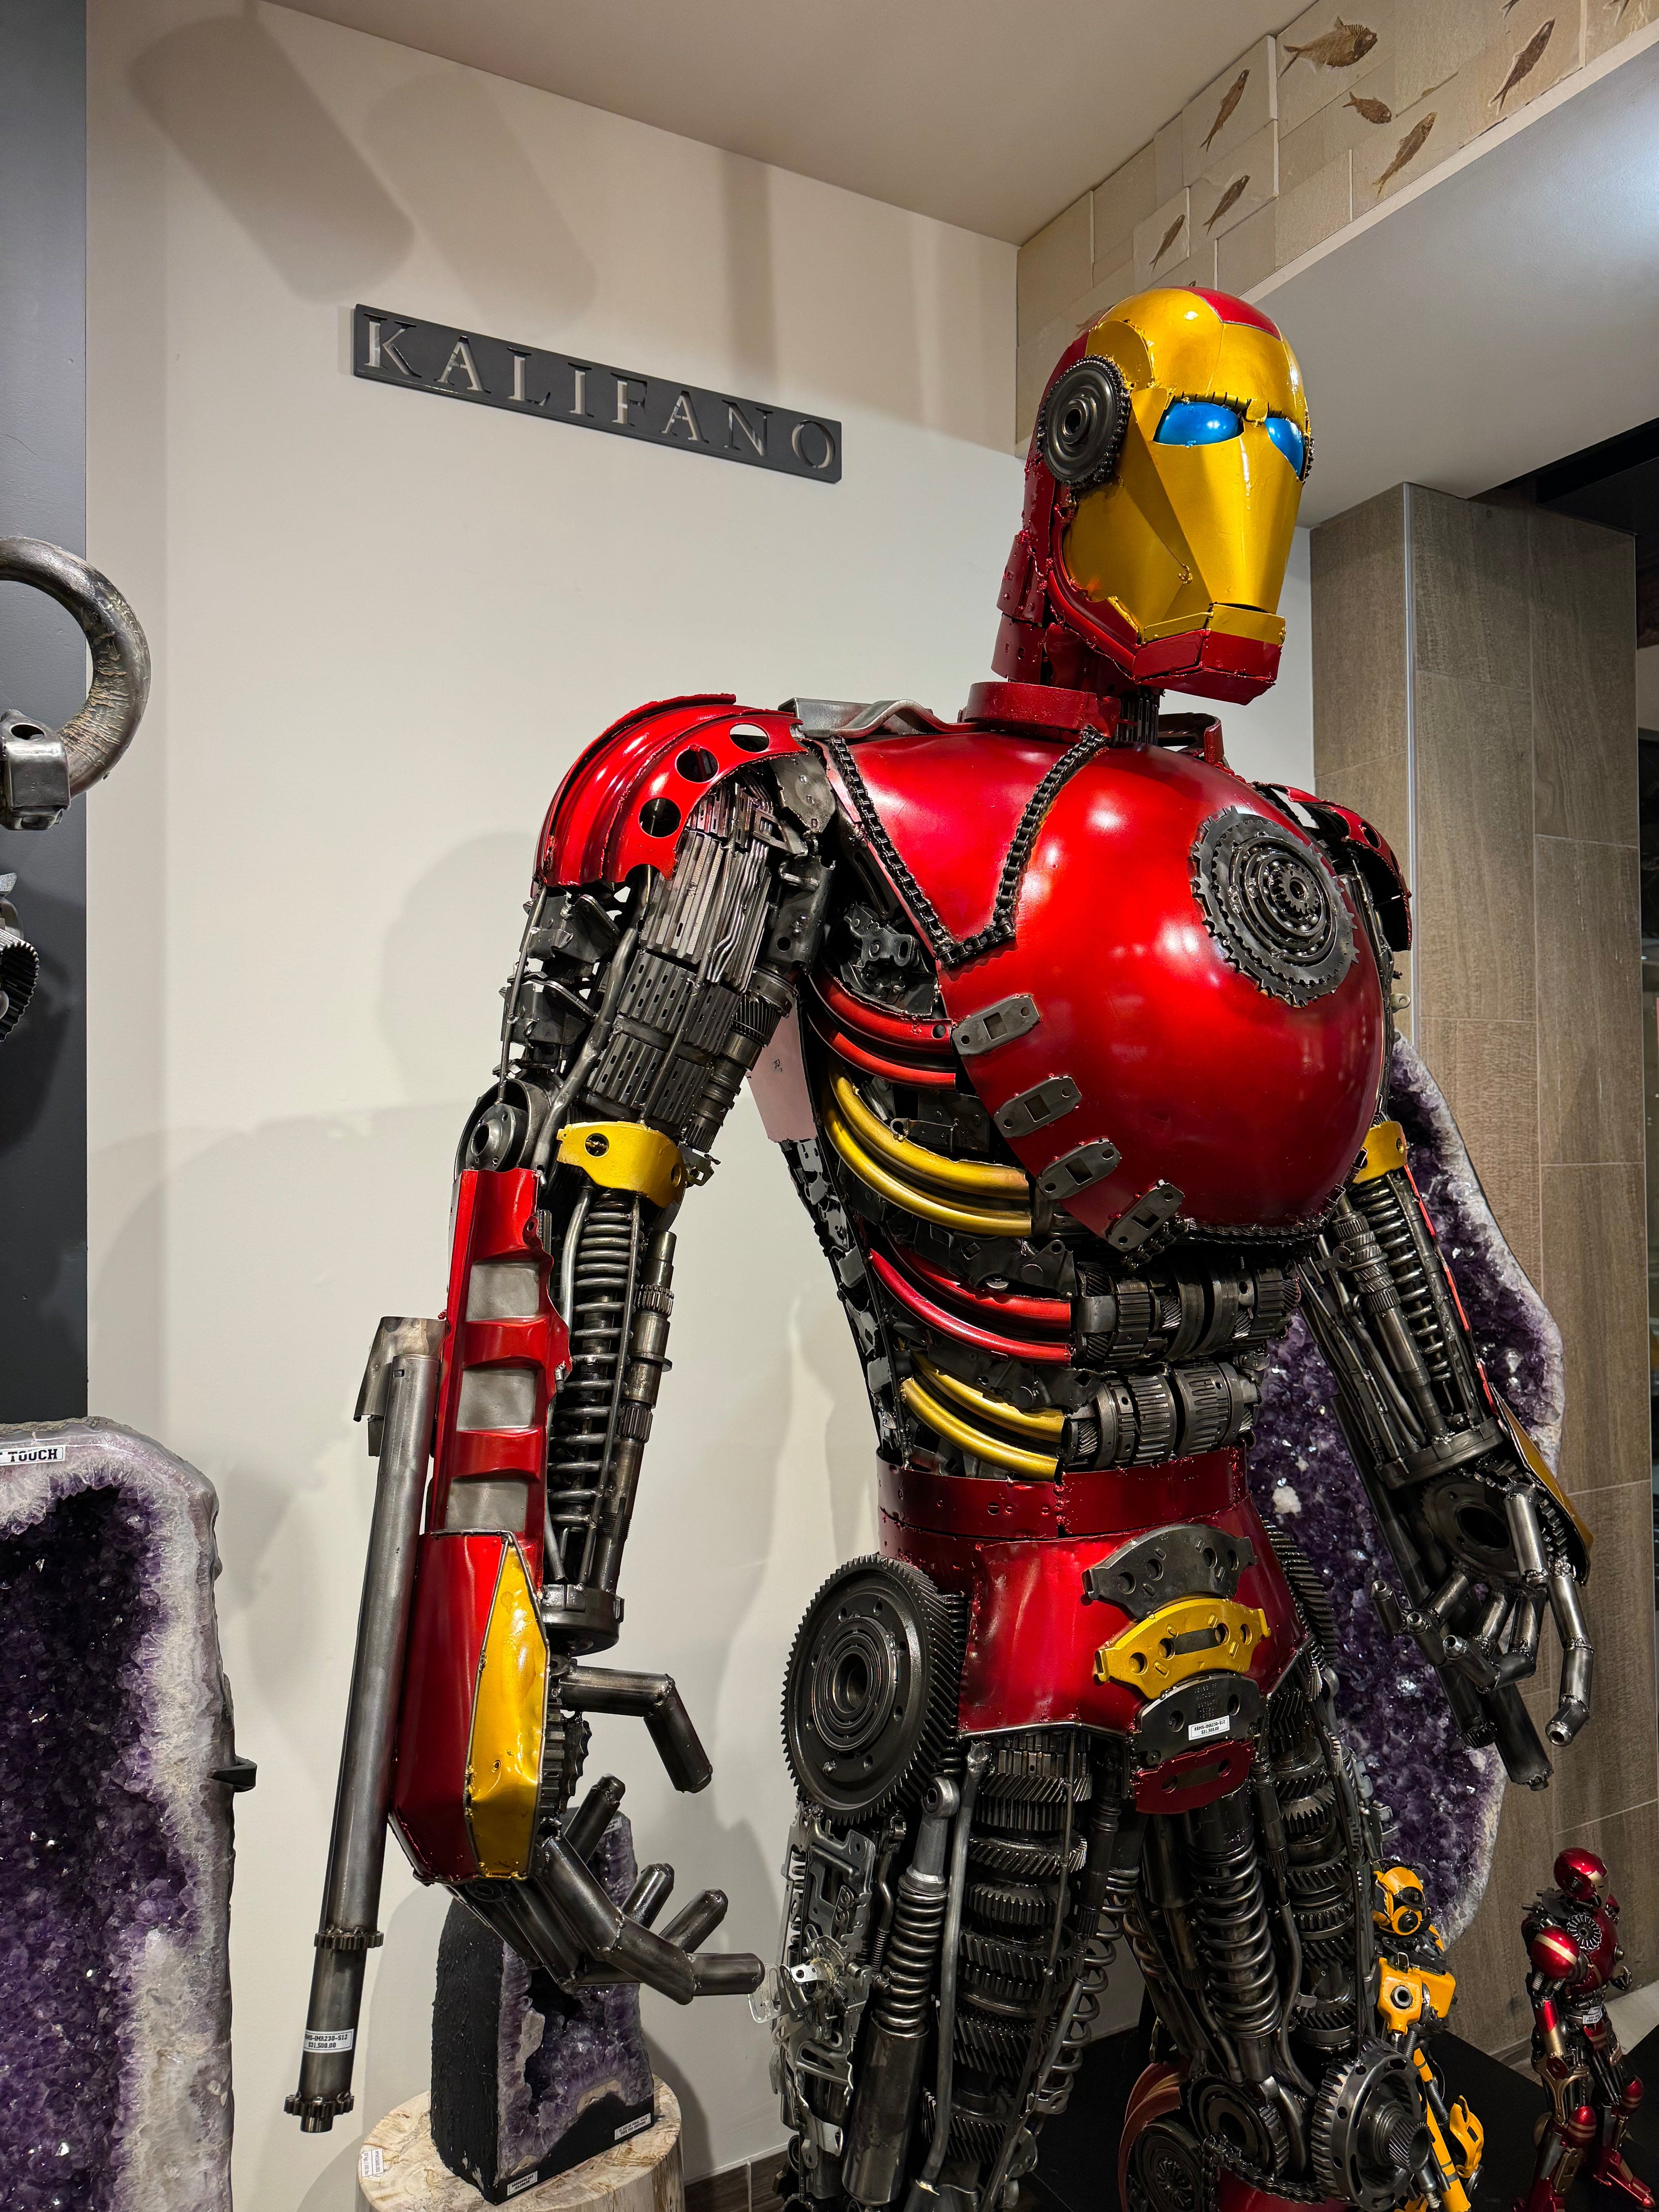 Kalifano Recycled Metal Art 91" Iron Man Inspired Recycled Metal Art Sculpture RMS-IMR230-S12